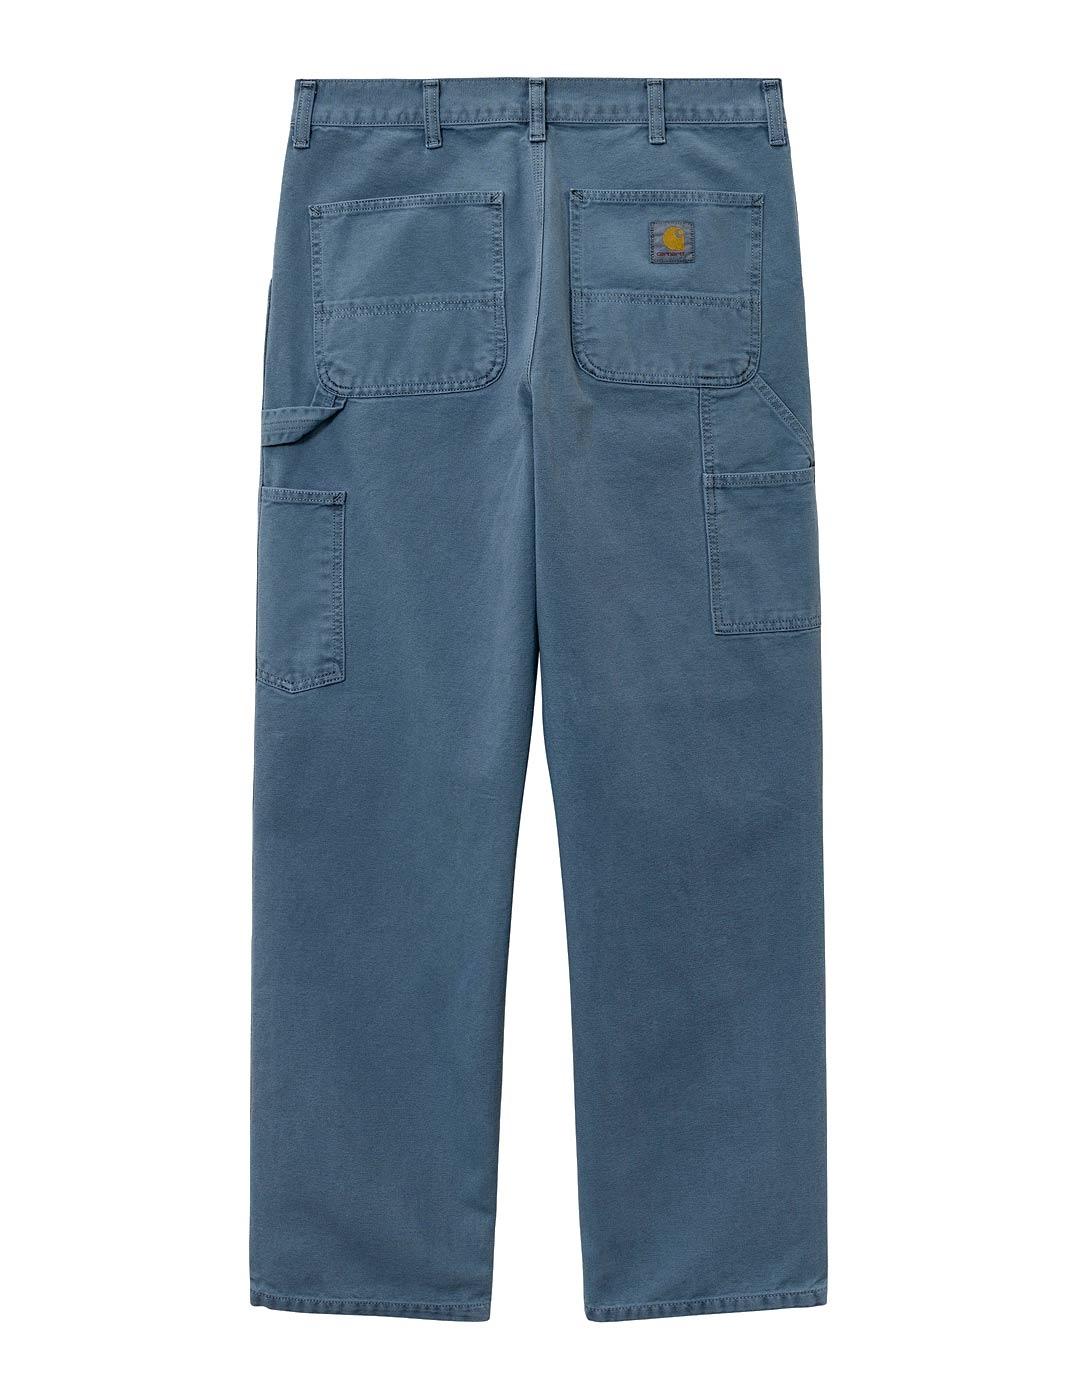 Pantalones Carhartt Single Knee Azul Indigo